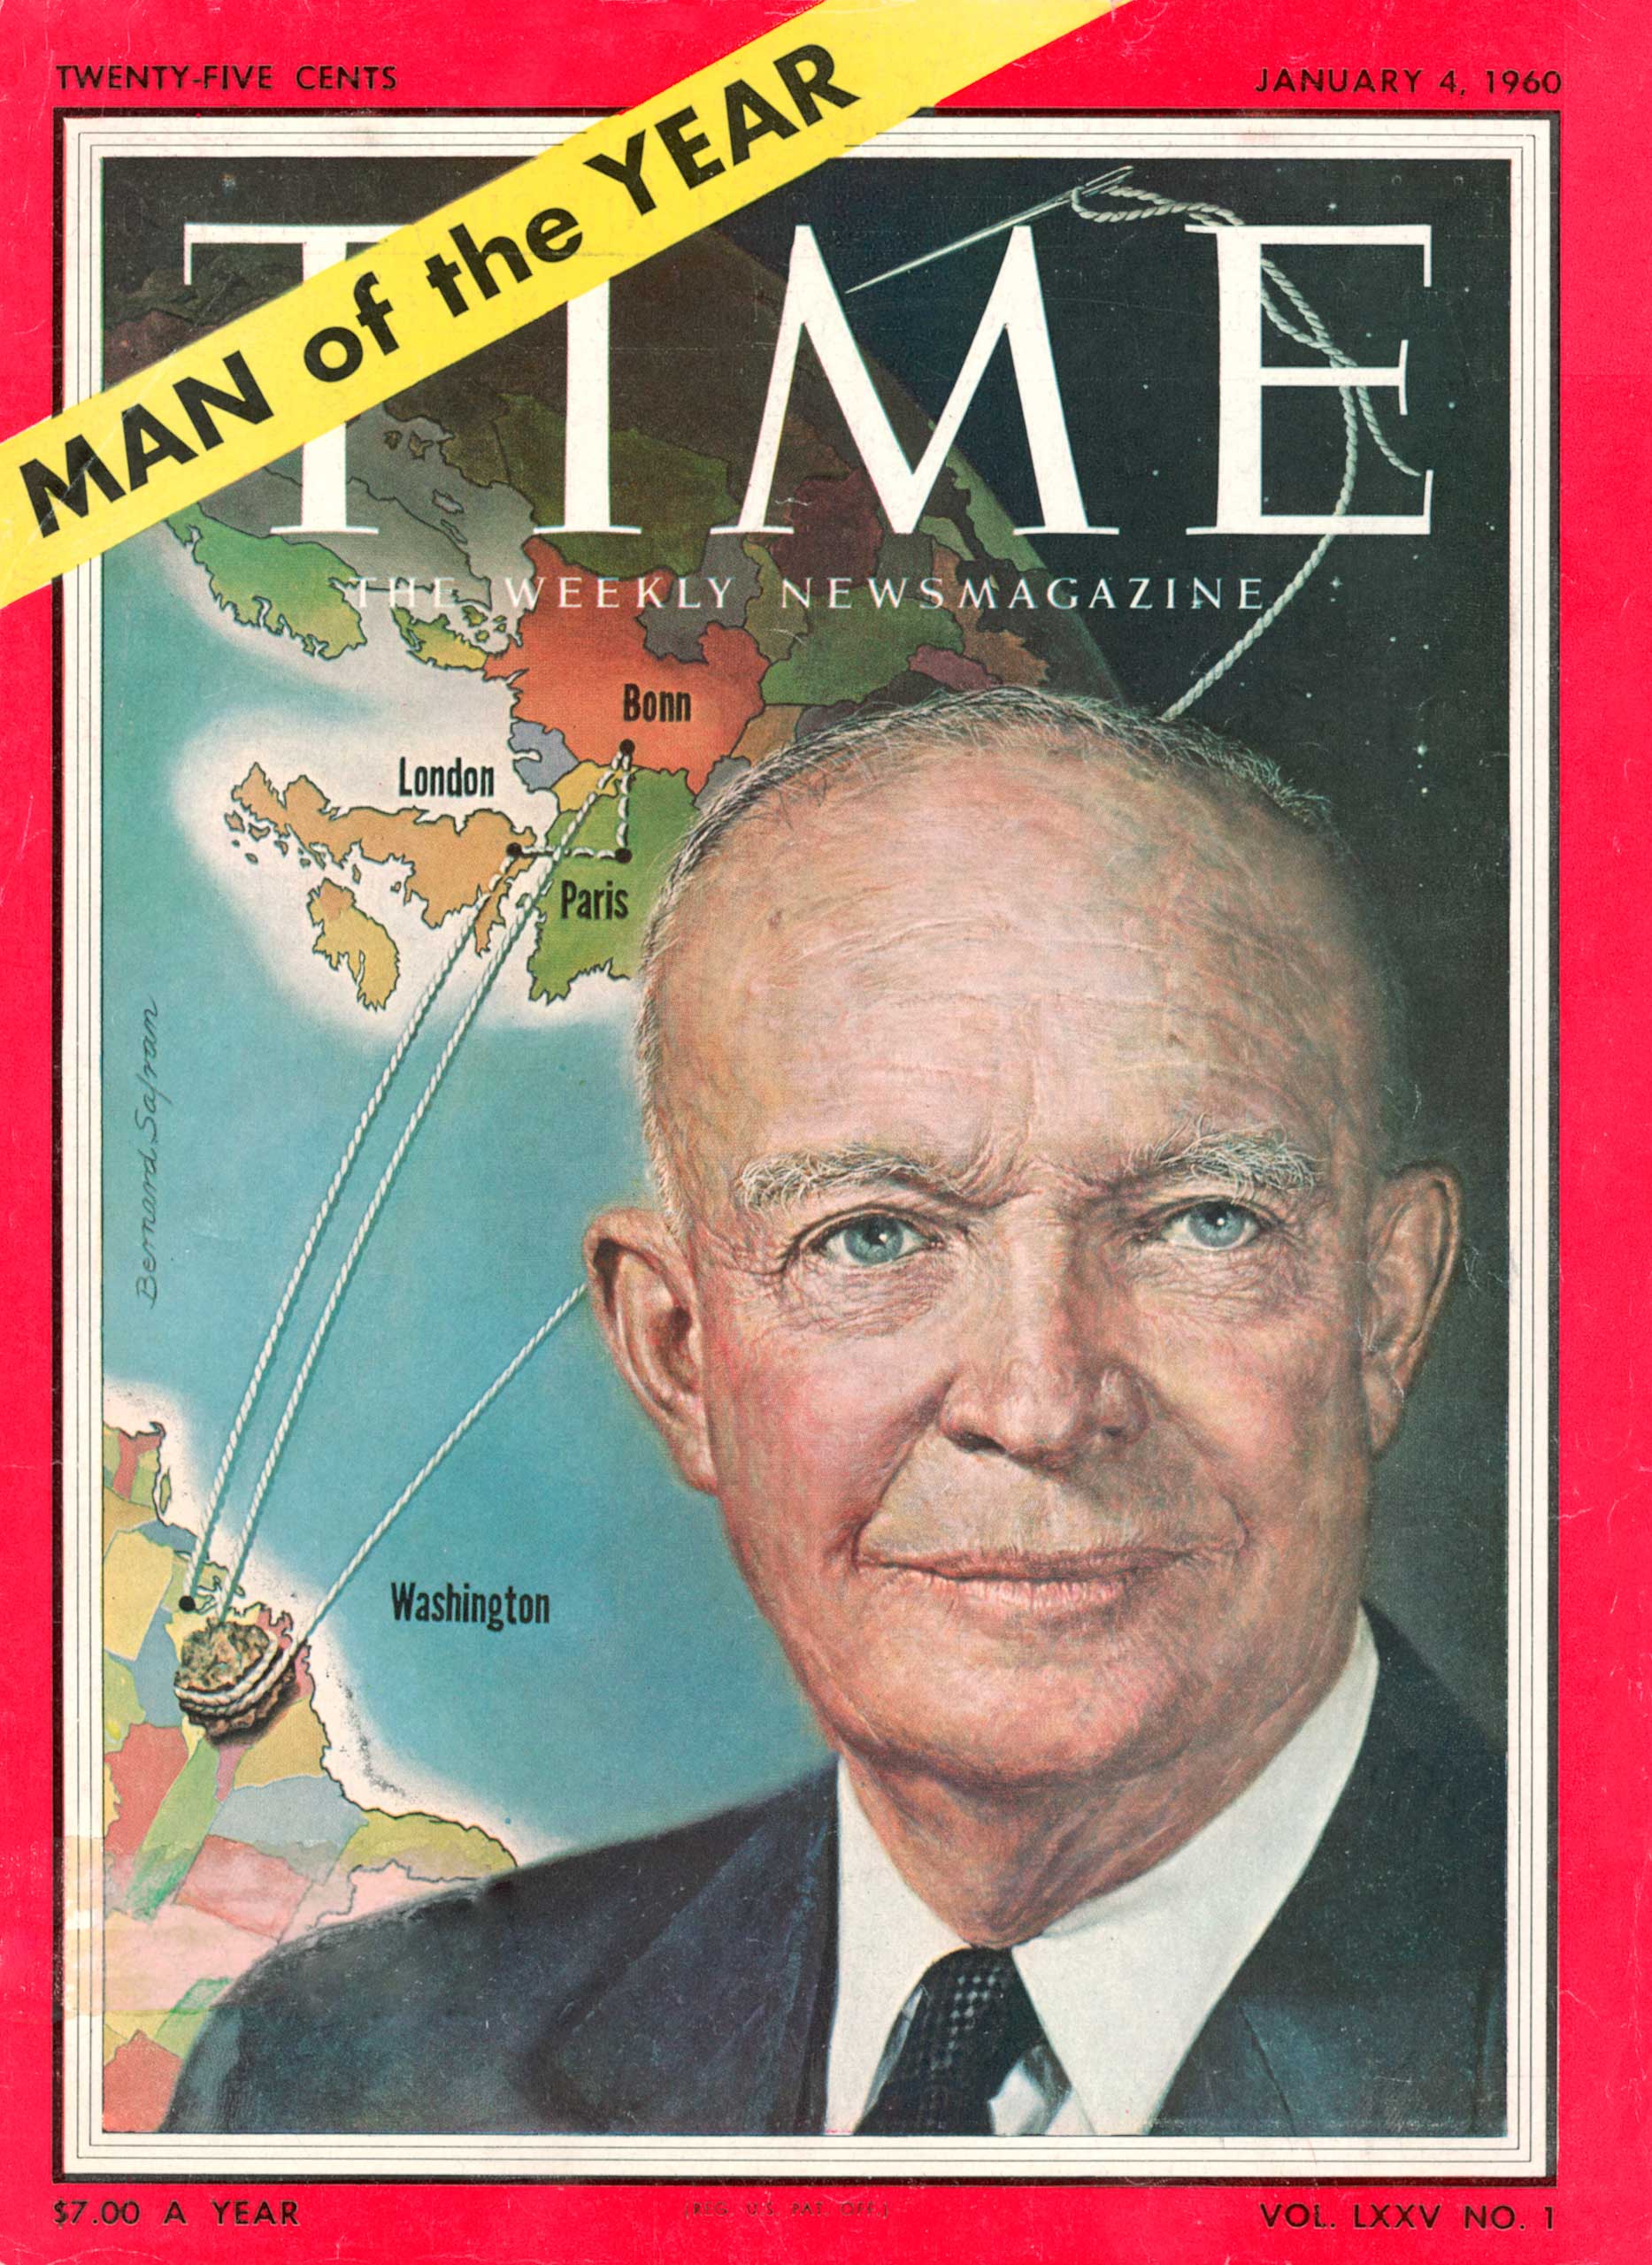 1959: President Dwight D. Eisenhower